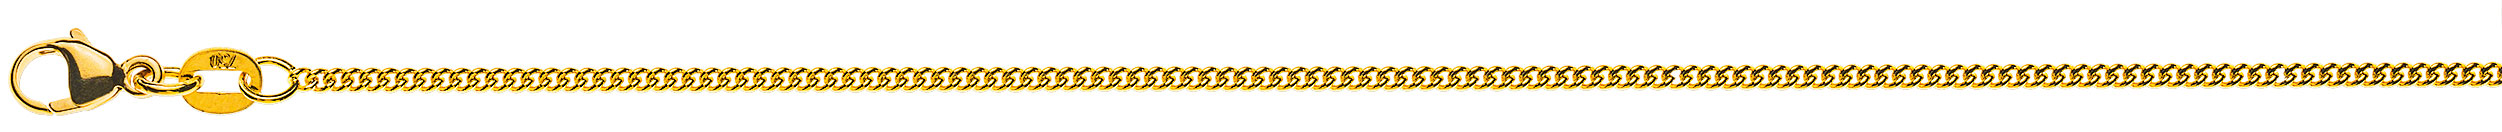 AURONOS Prestige Necklace yellow gold 18K round curb chain 40cm 1.6mm